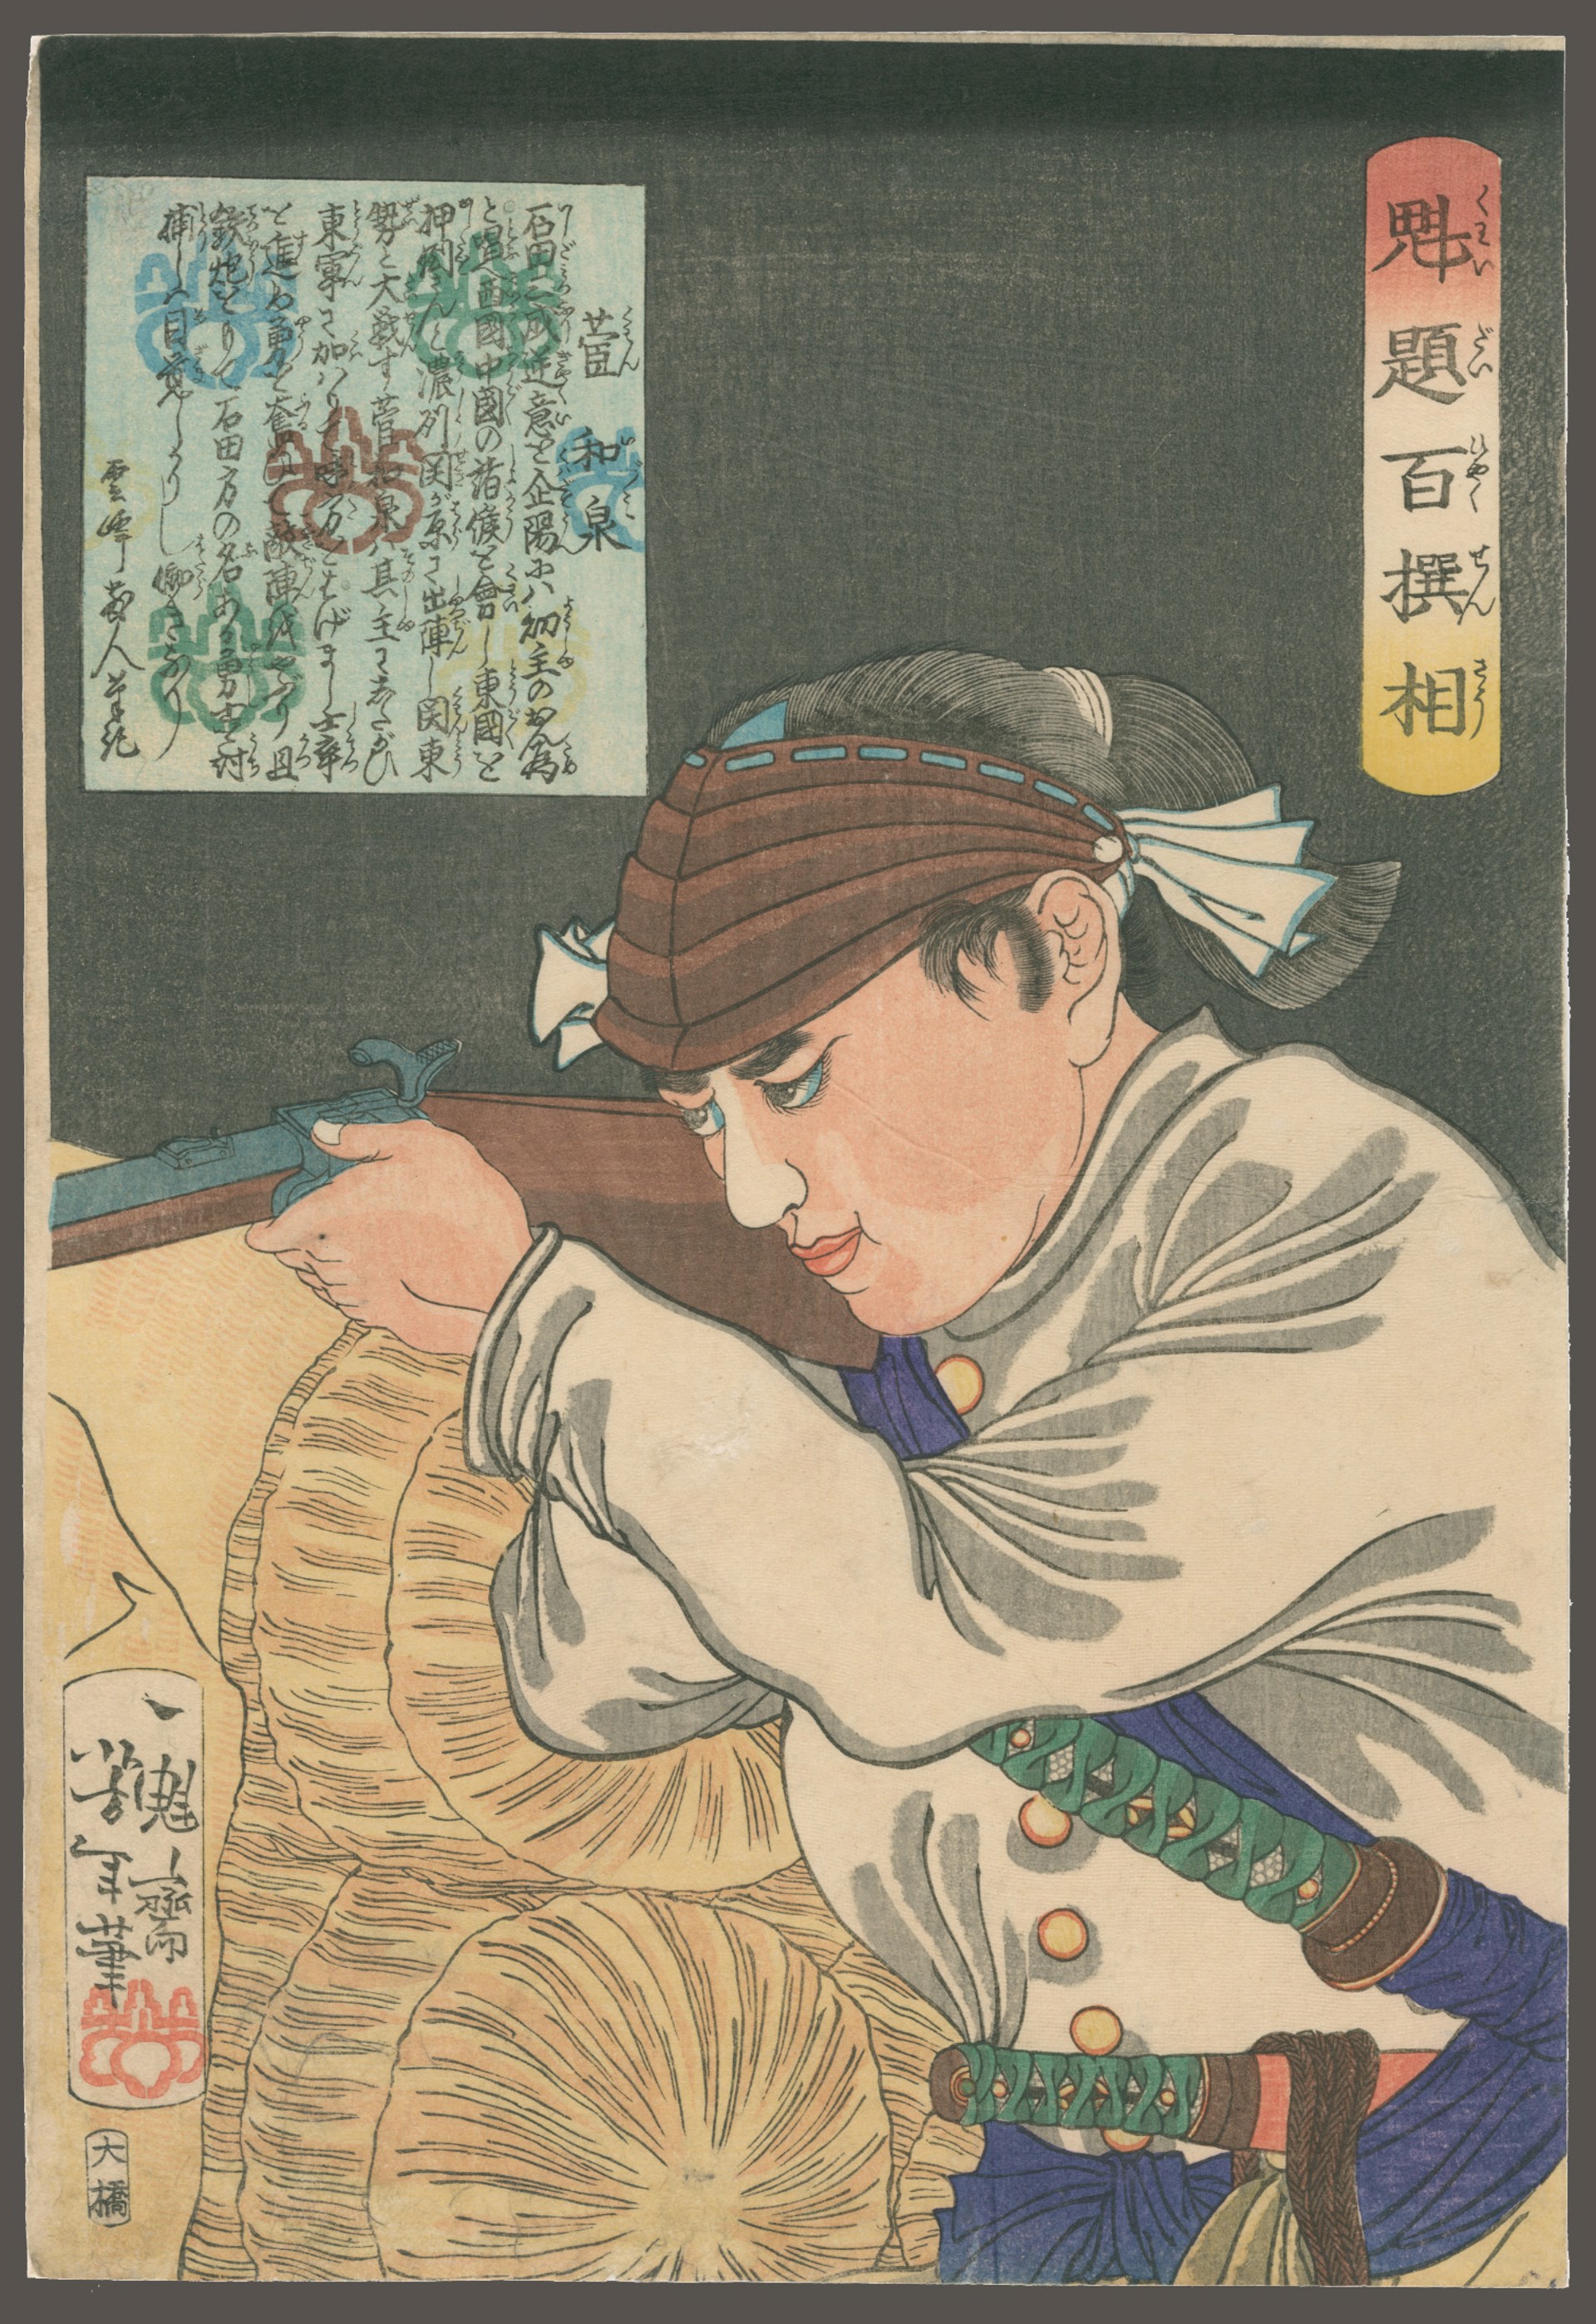 #43 Kan Izumi aiming a Rifle From Behind Rice bales 100 Warriors by Yoshitoshi